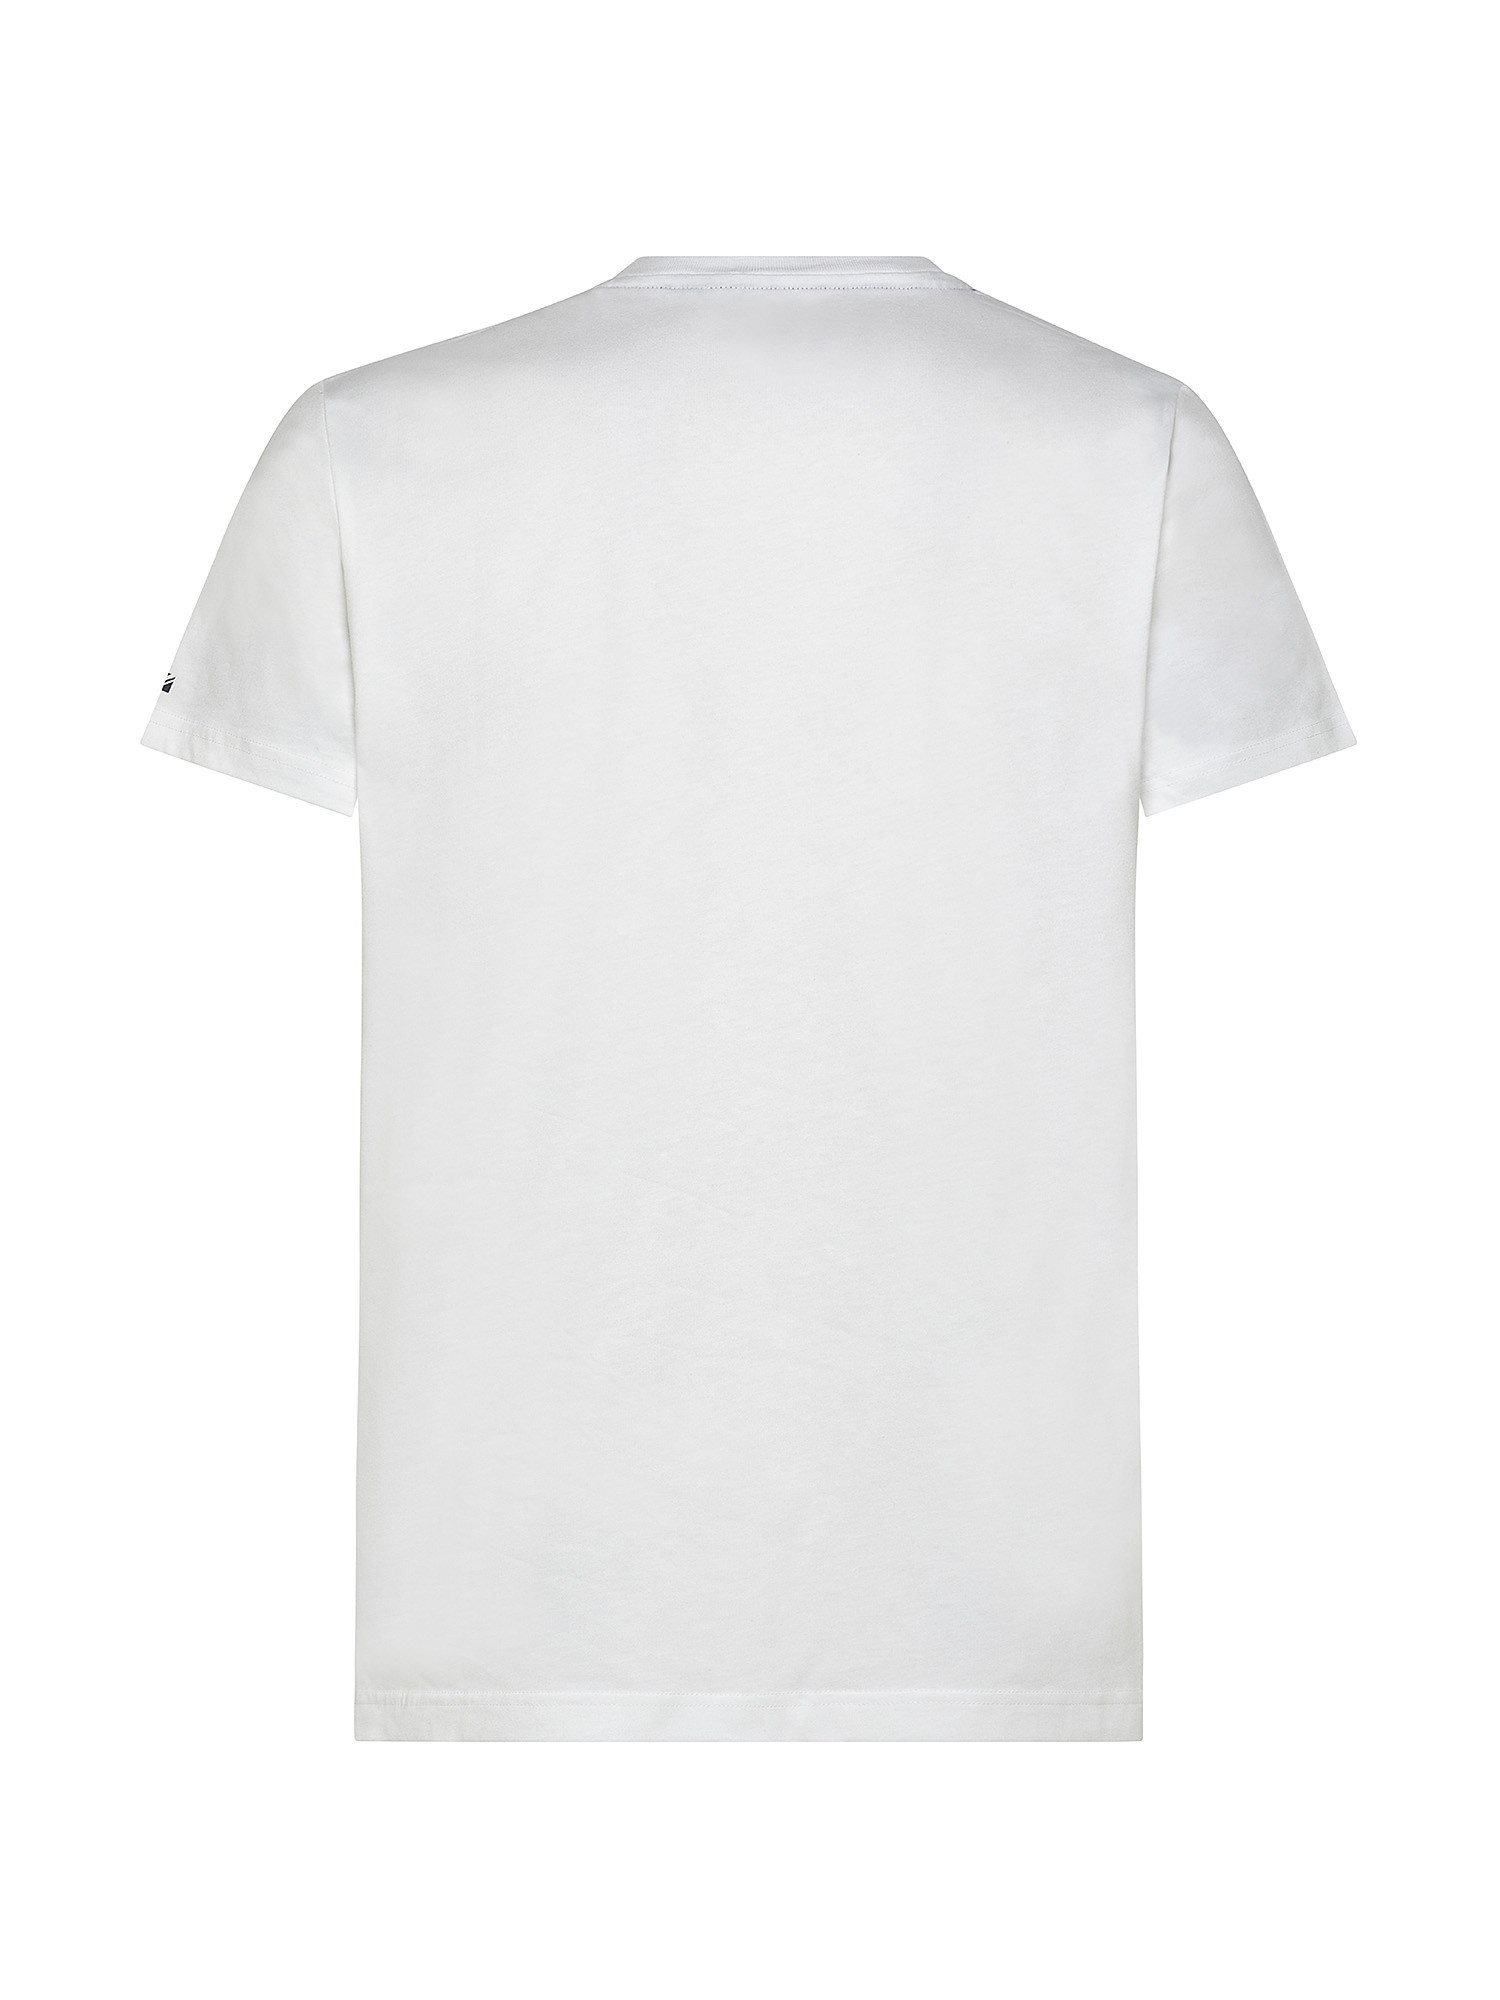 Trey cotton T-shirt, White, large image number 1